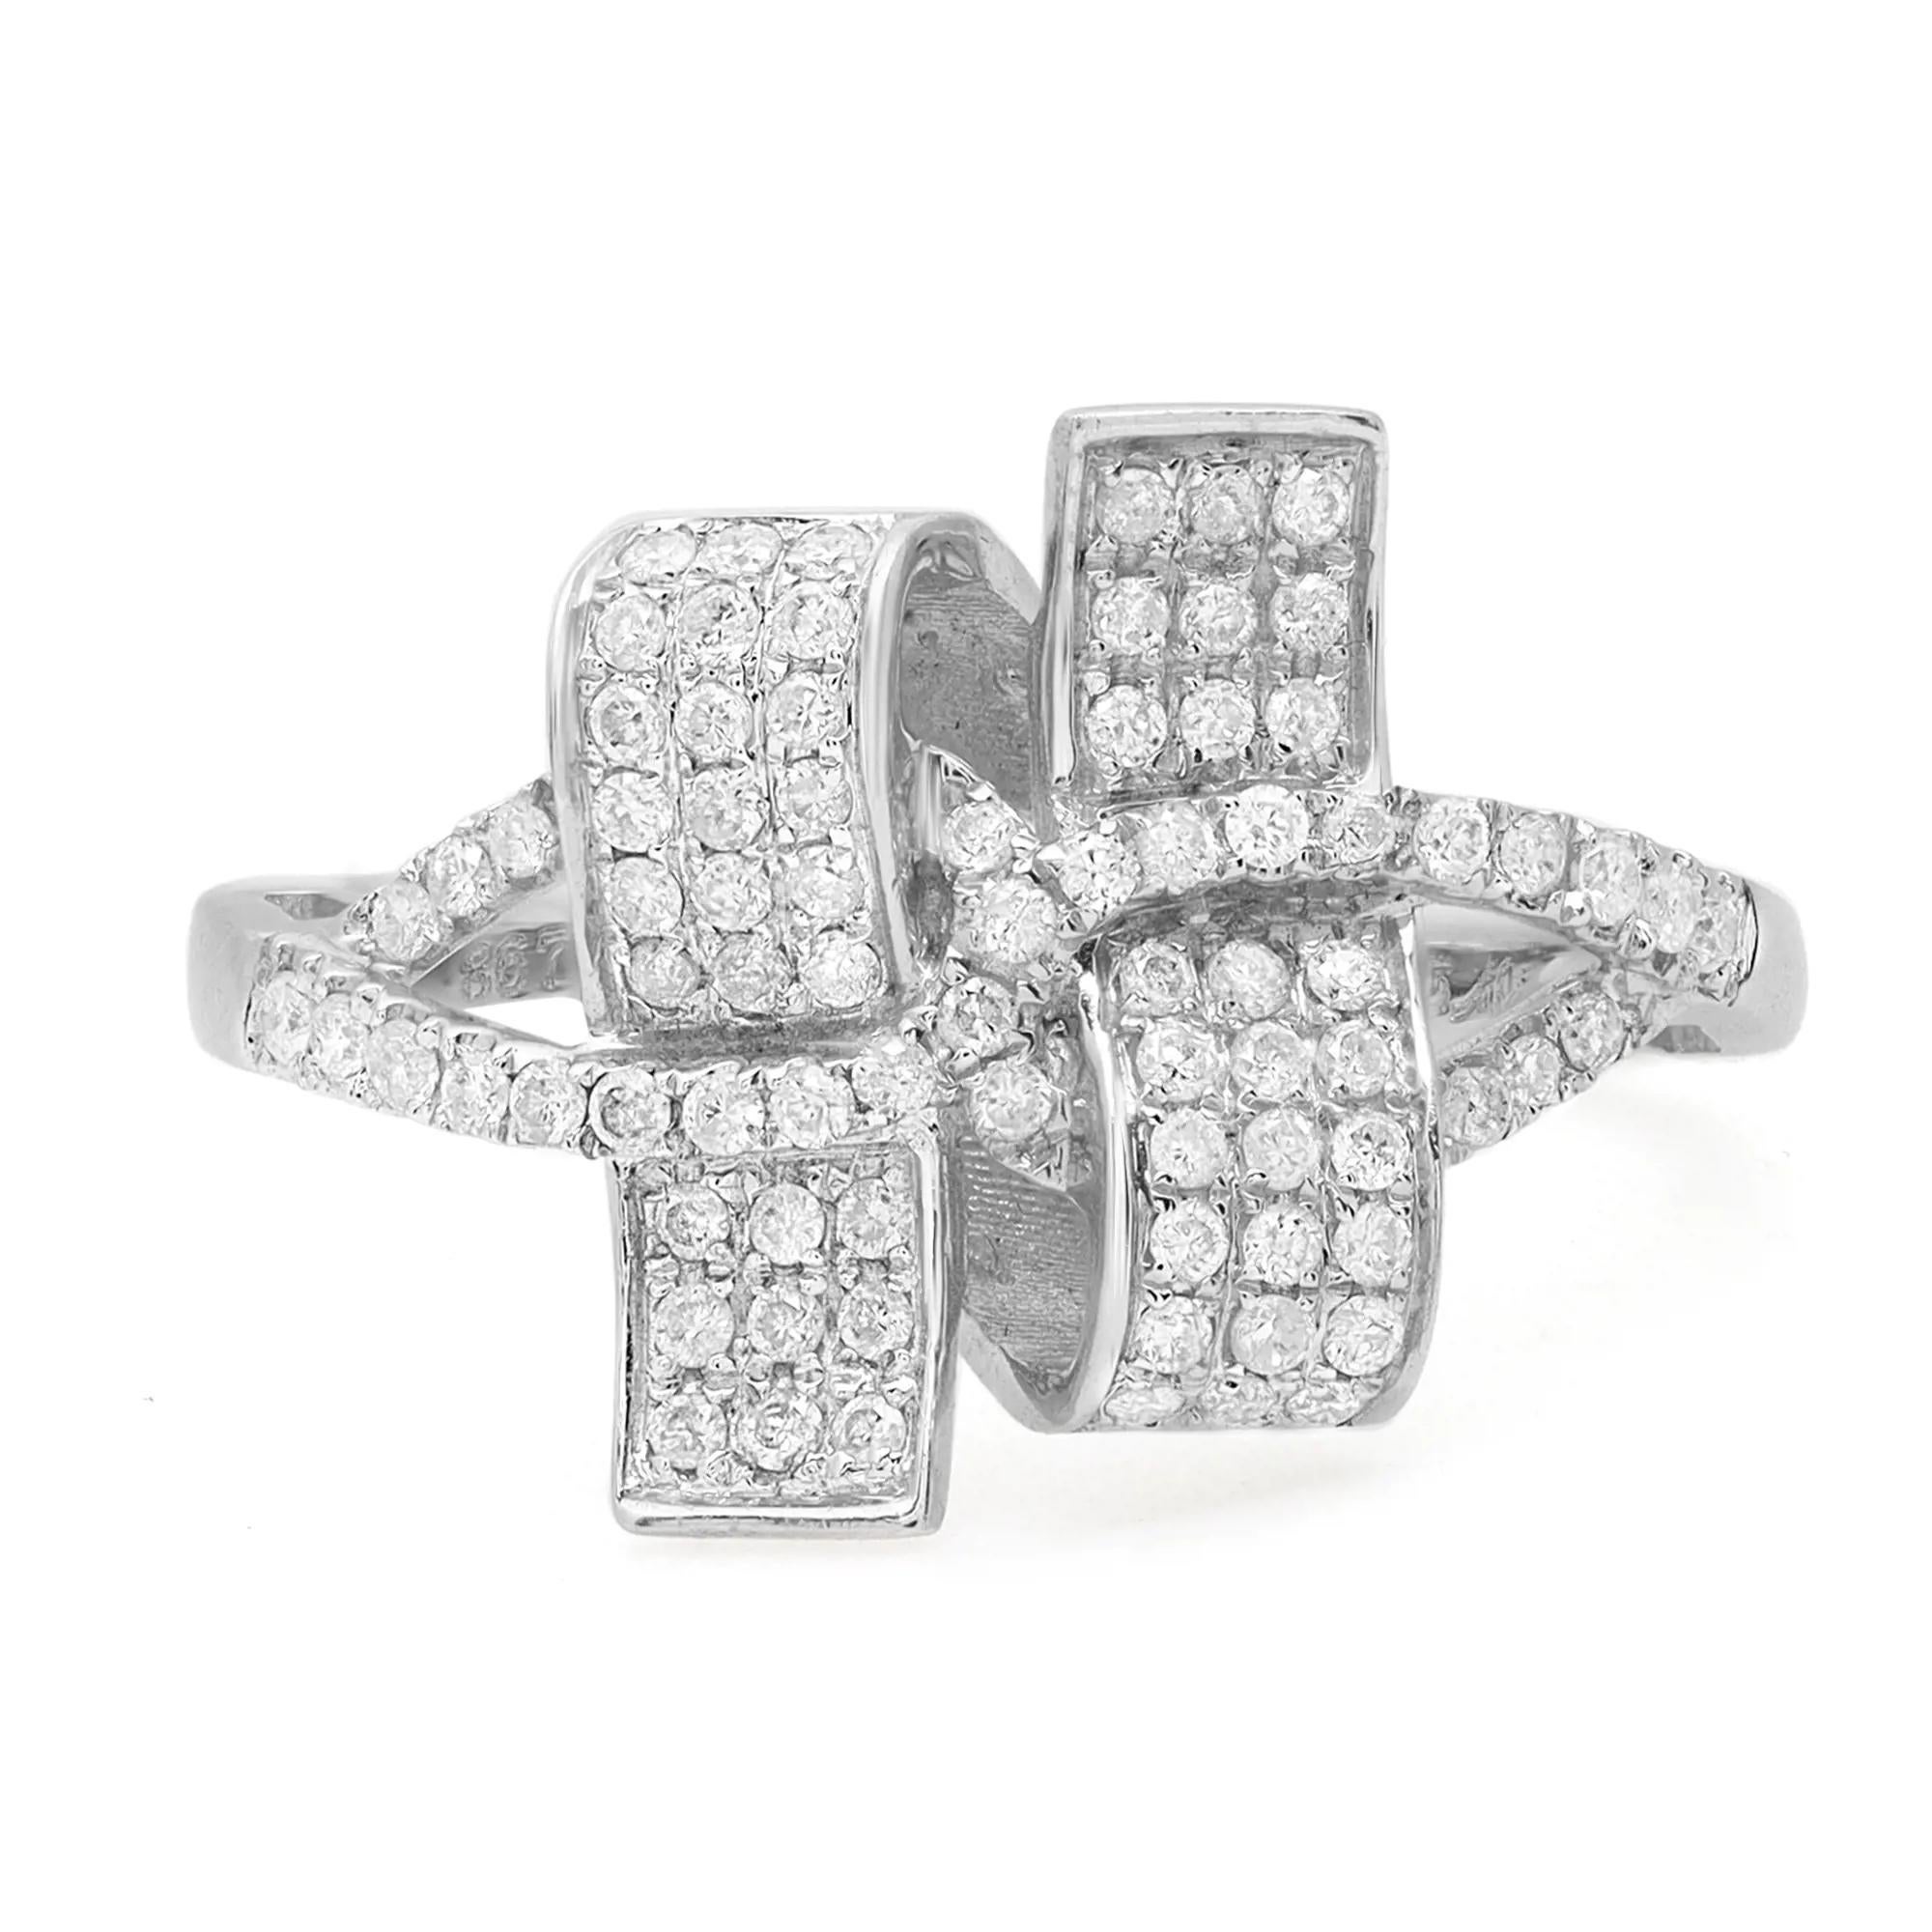 0.47 Carat Pave Set Round Cut Diamond Ladies Ring 14k White Gold For Sale